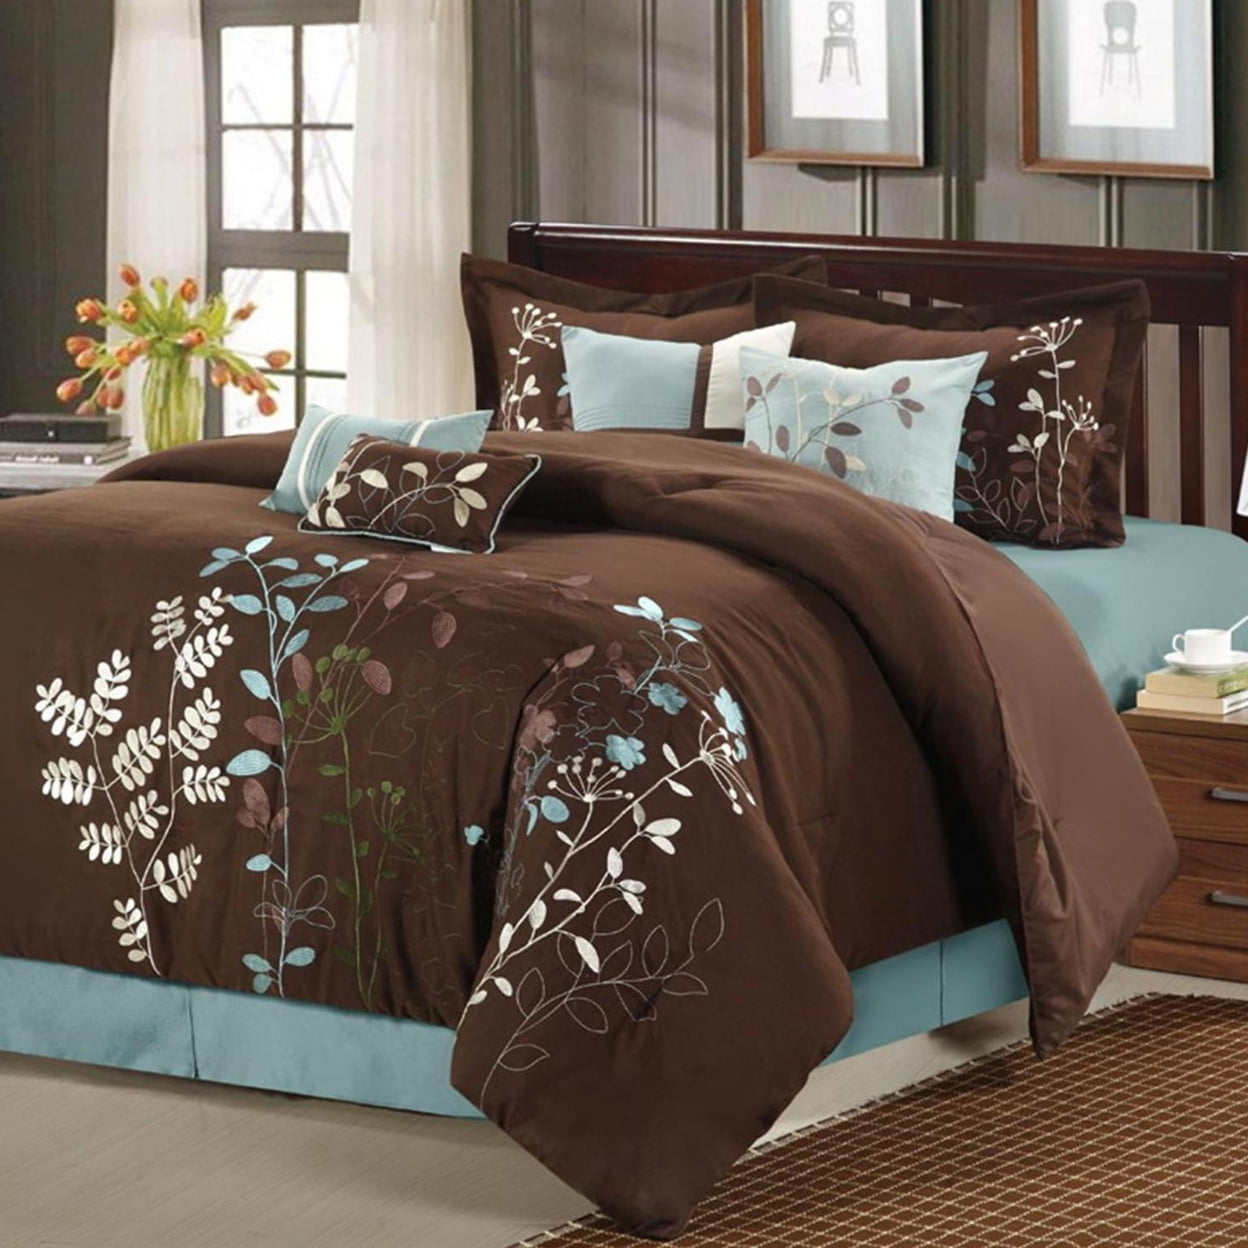 Bliss Garden Embroidered Comforter Set - Brown - Queen - 8 Piece